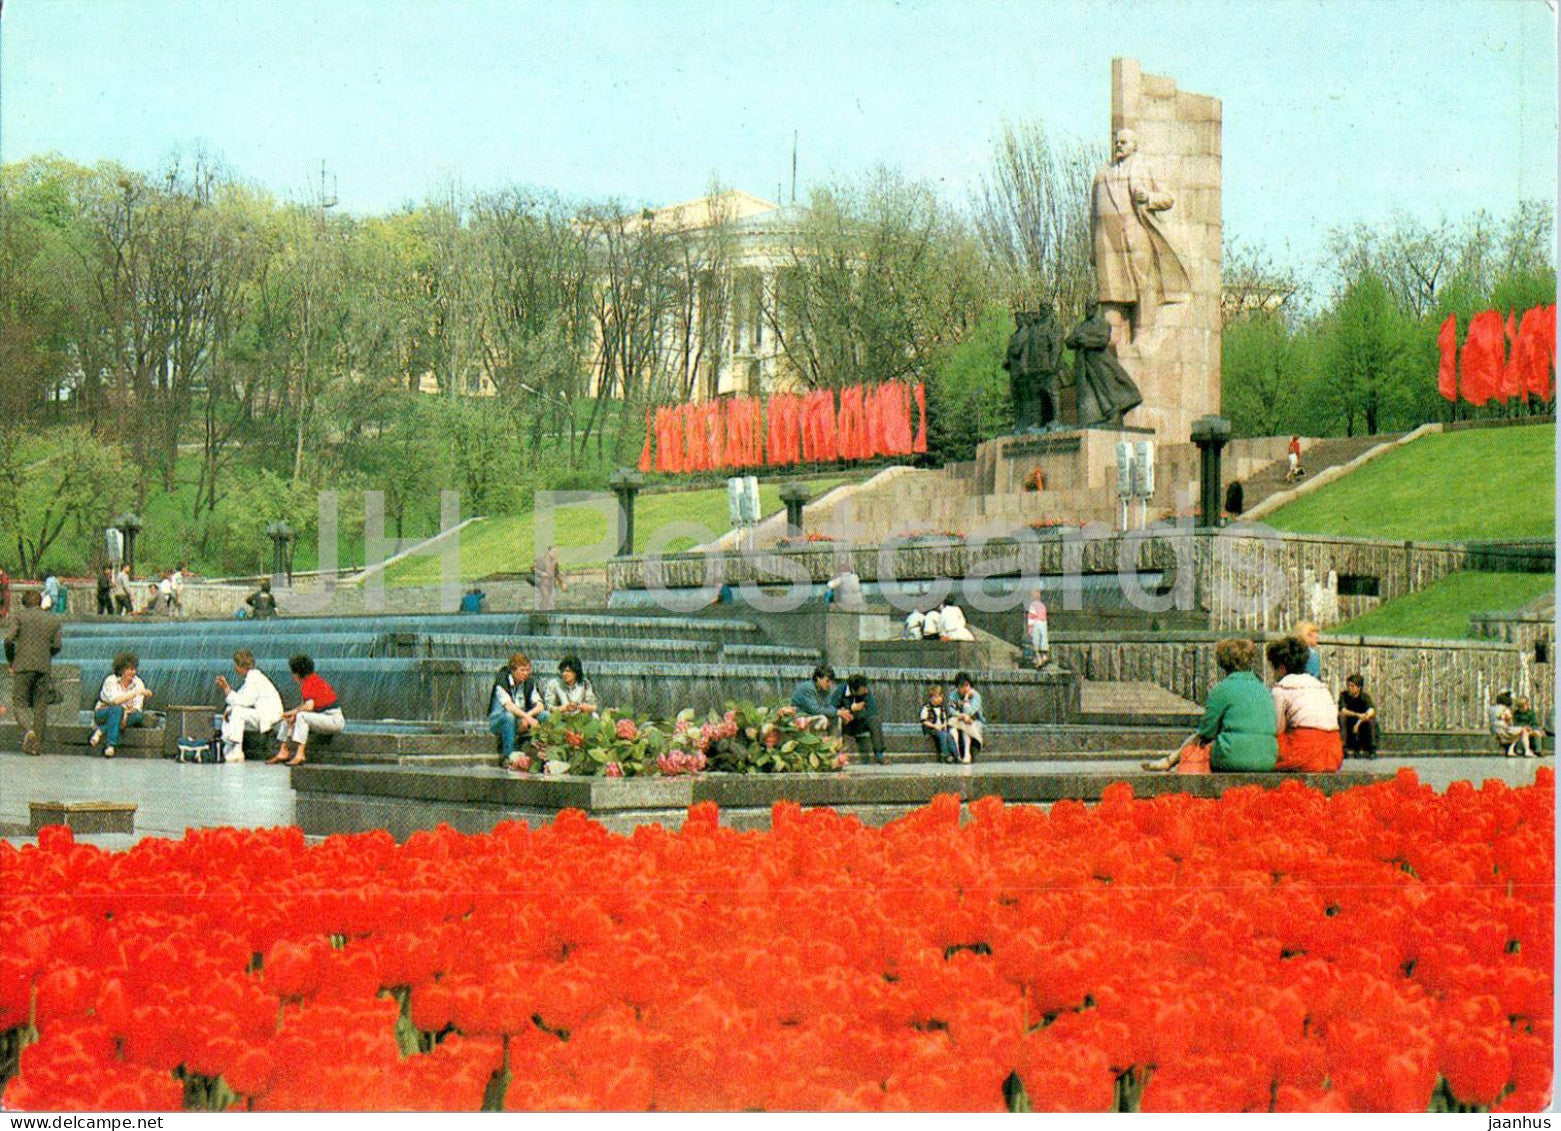 Kyiv - Kiev - monument in honour of the Great October Socialist Revolution - 1989 - Ukraine USSR - unused - JH Postcards